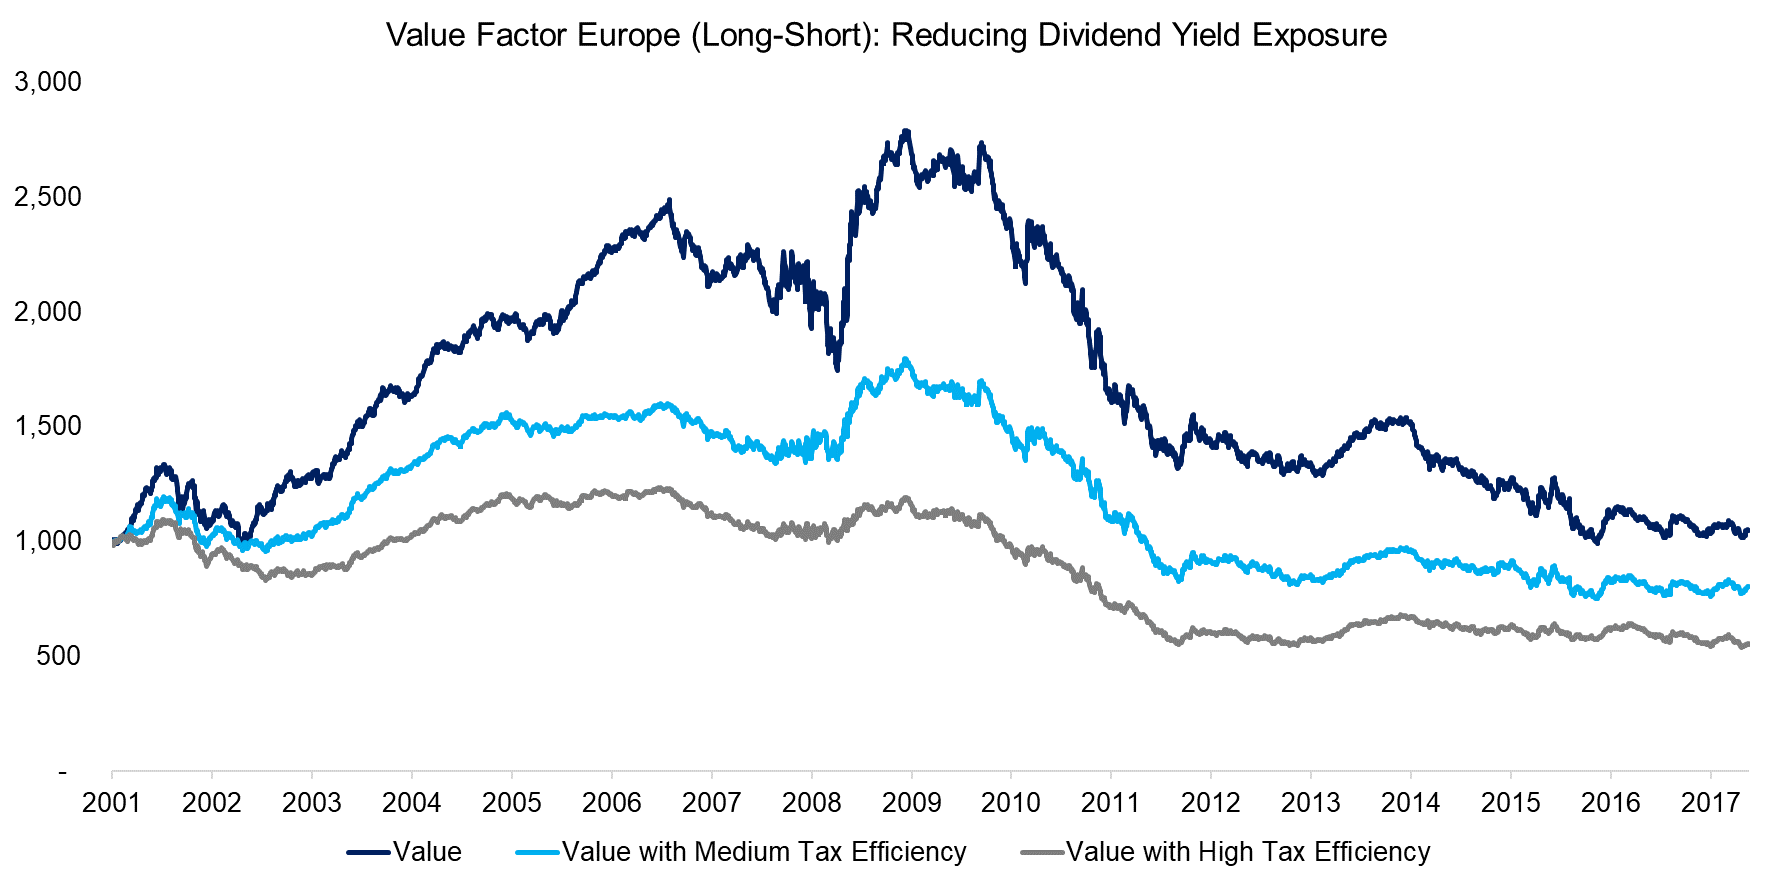 Value Factor Europe (Long-Short) Reducing Dividend Yield Exposure